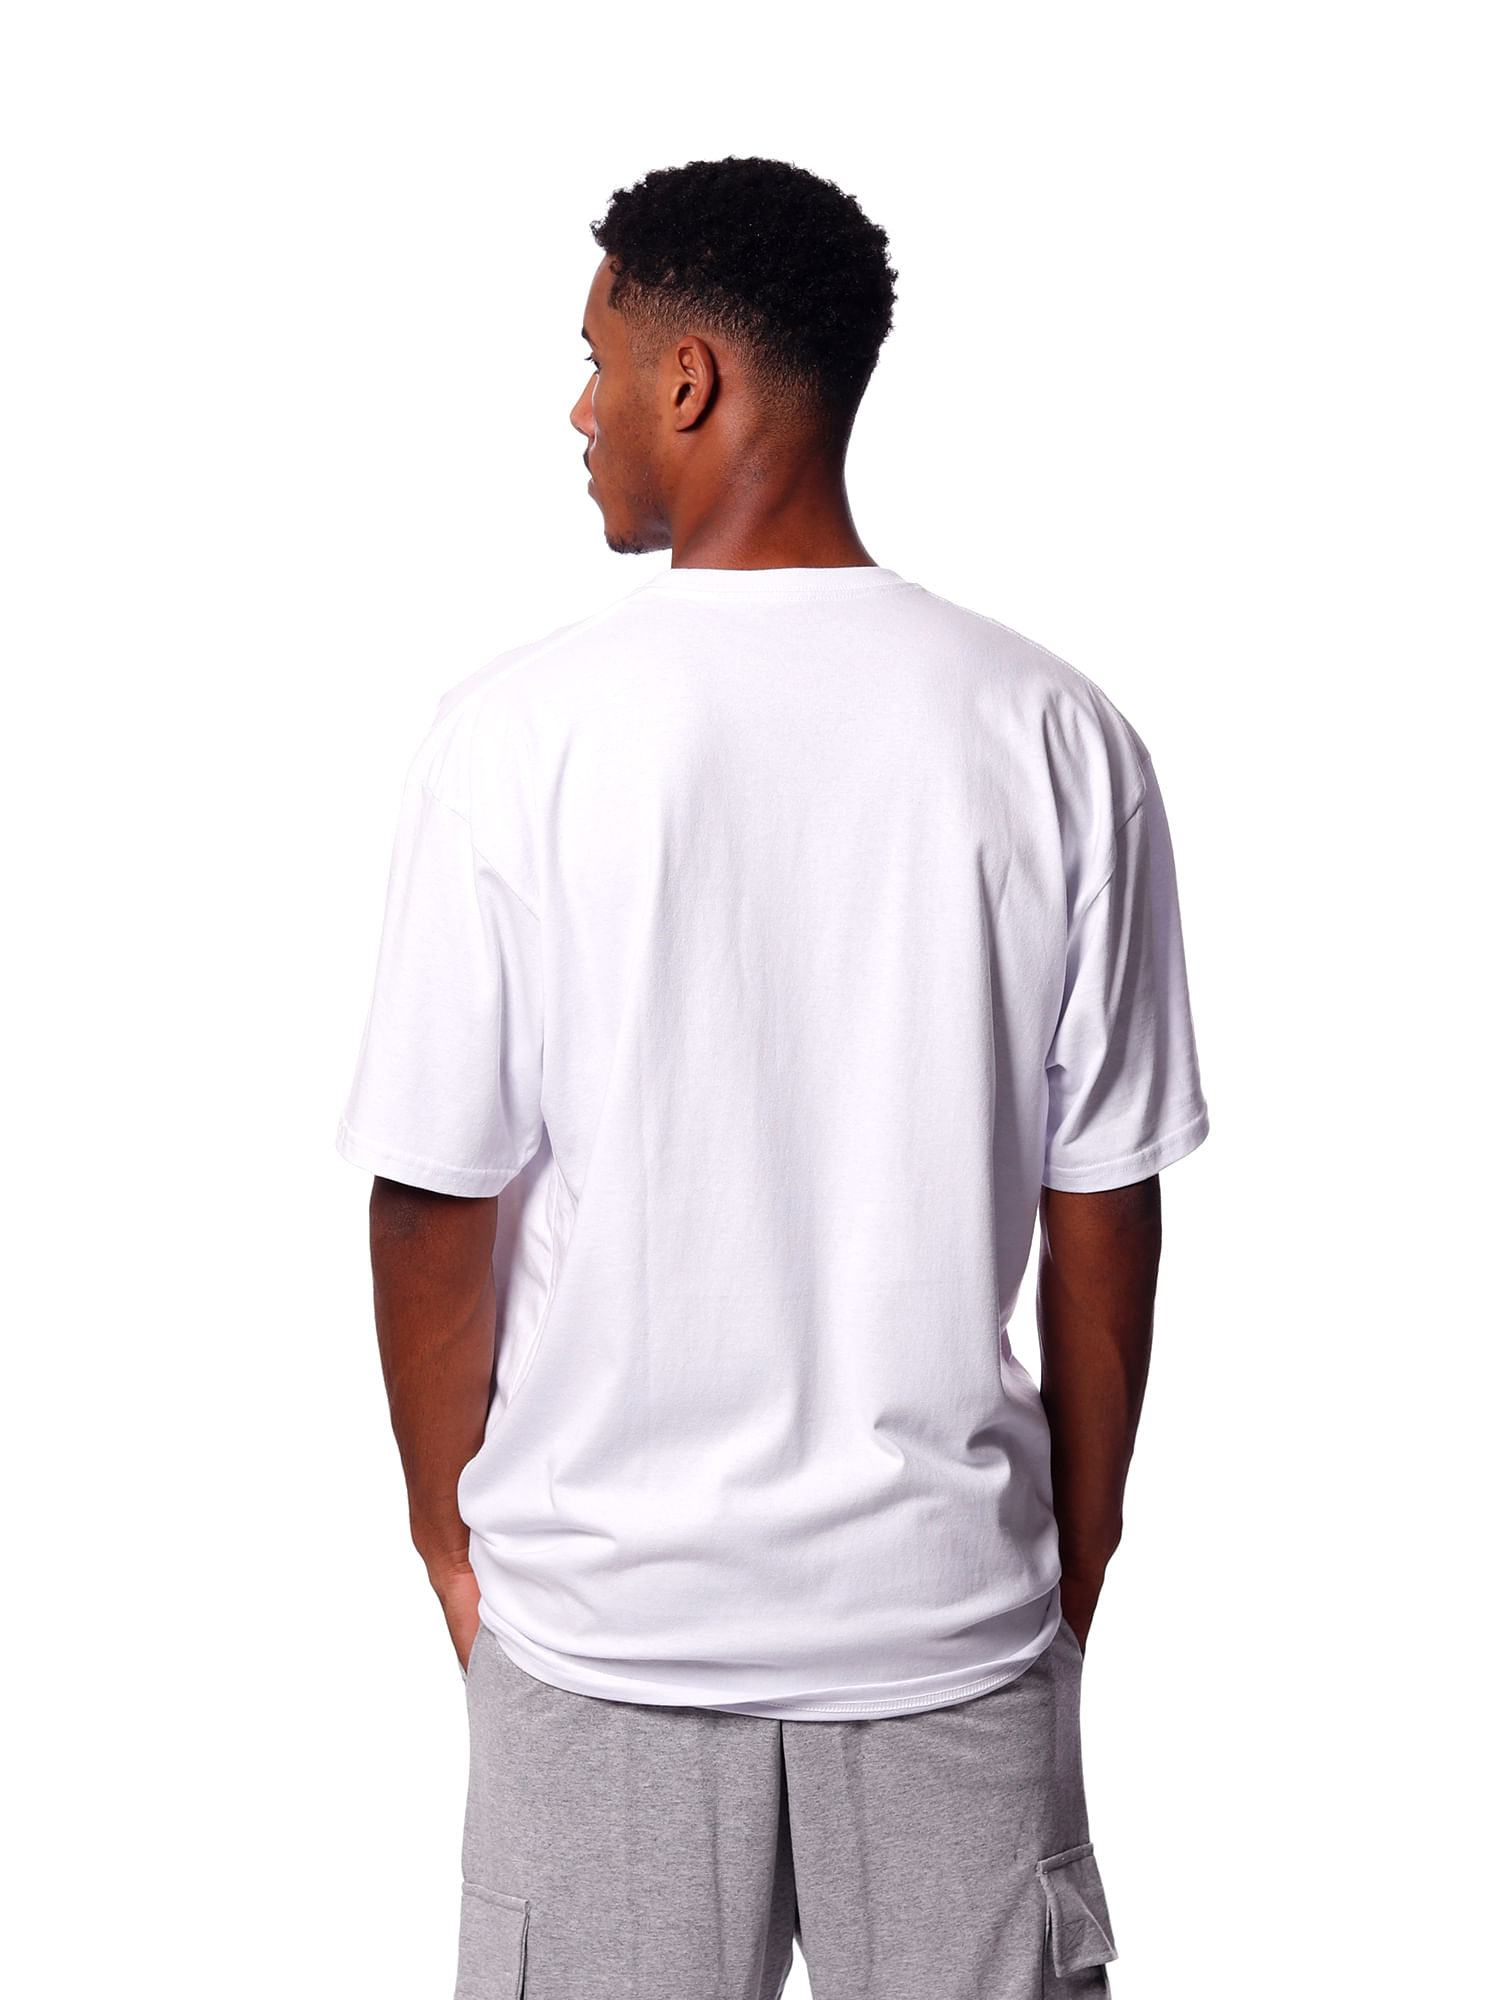 Camiseta-vans-left-chest-logo-Branco